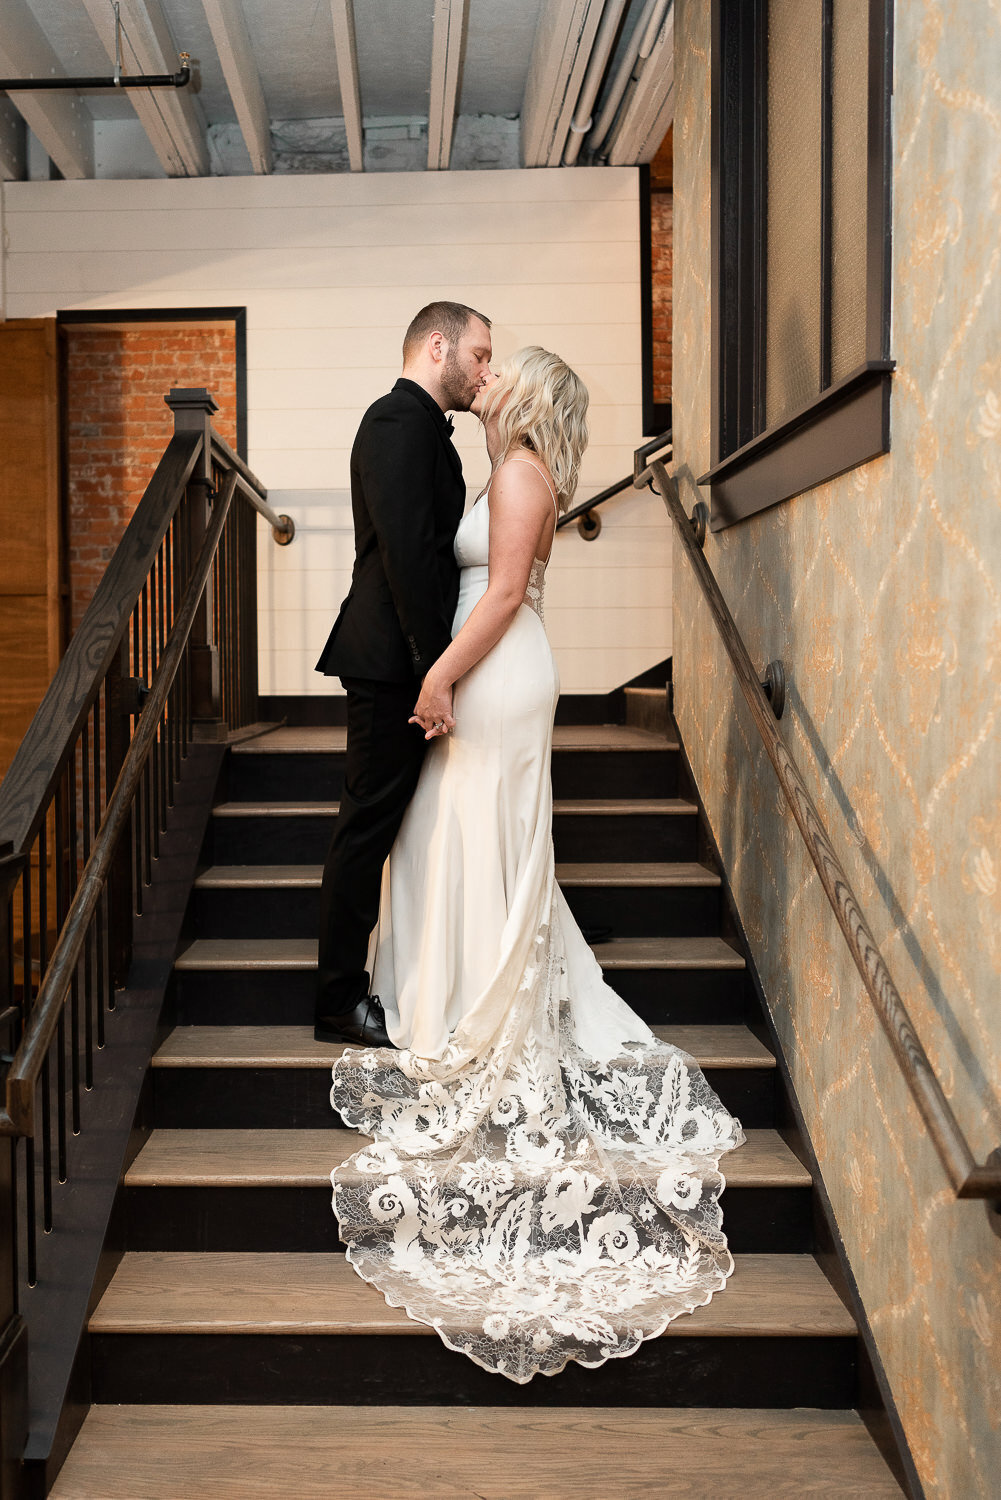 Minnesota Wedding Photography - Candid Wedding Photos - RKH Images (9 of 15)